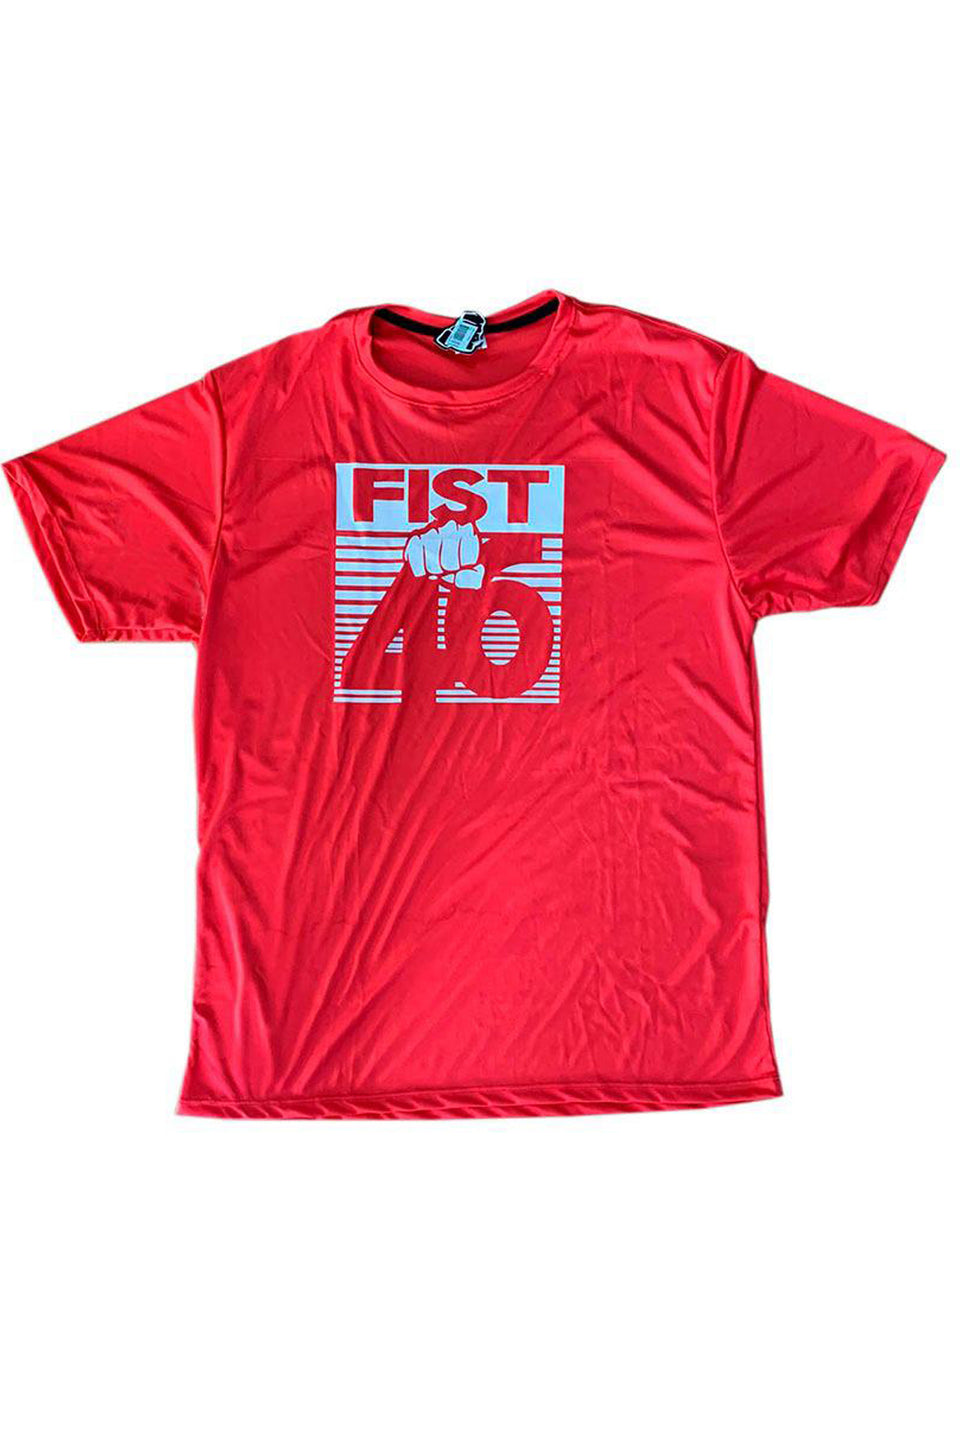 Camiseta Fist Gym Red Box